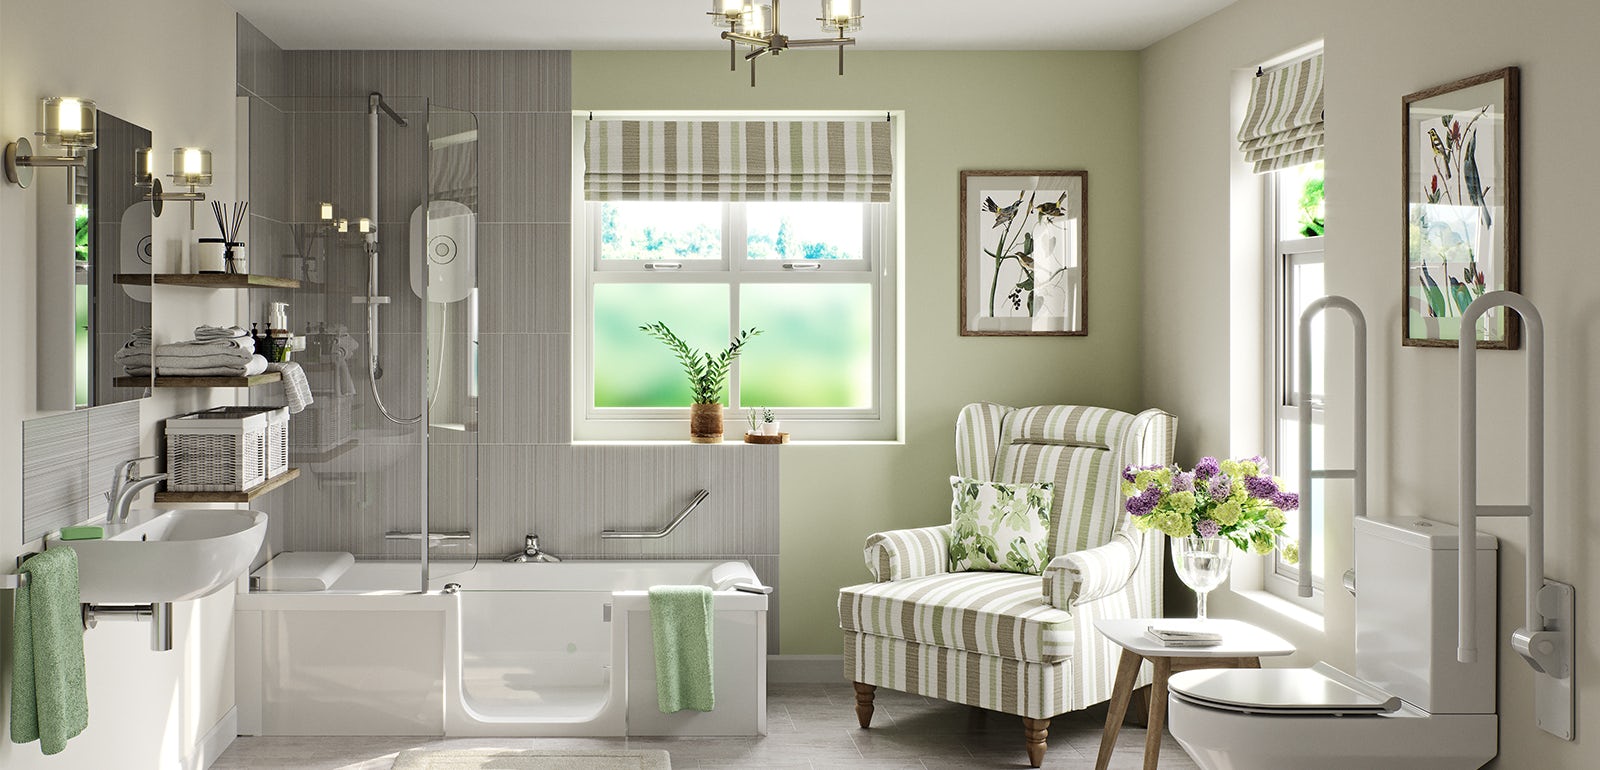 Independent Living Bathroom Ideas For, Best Bathroom Design For Seniors